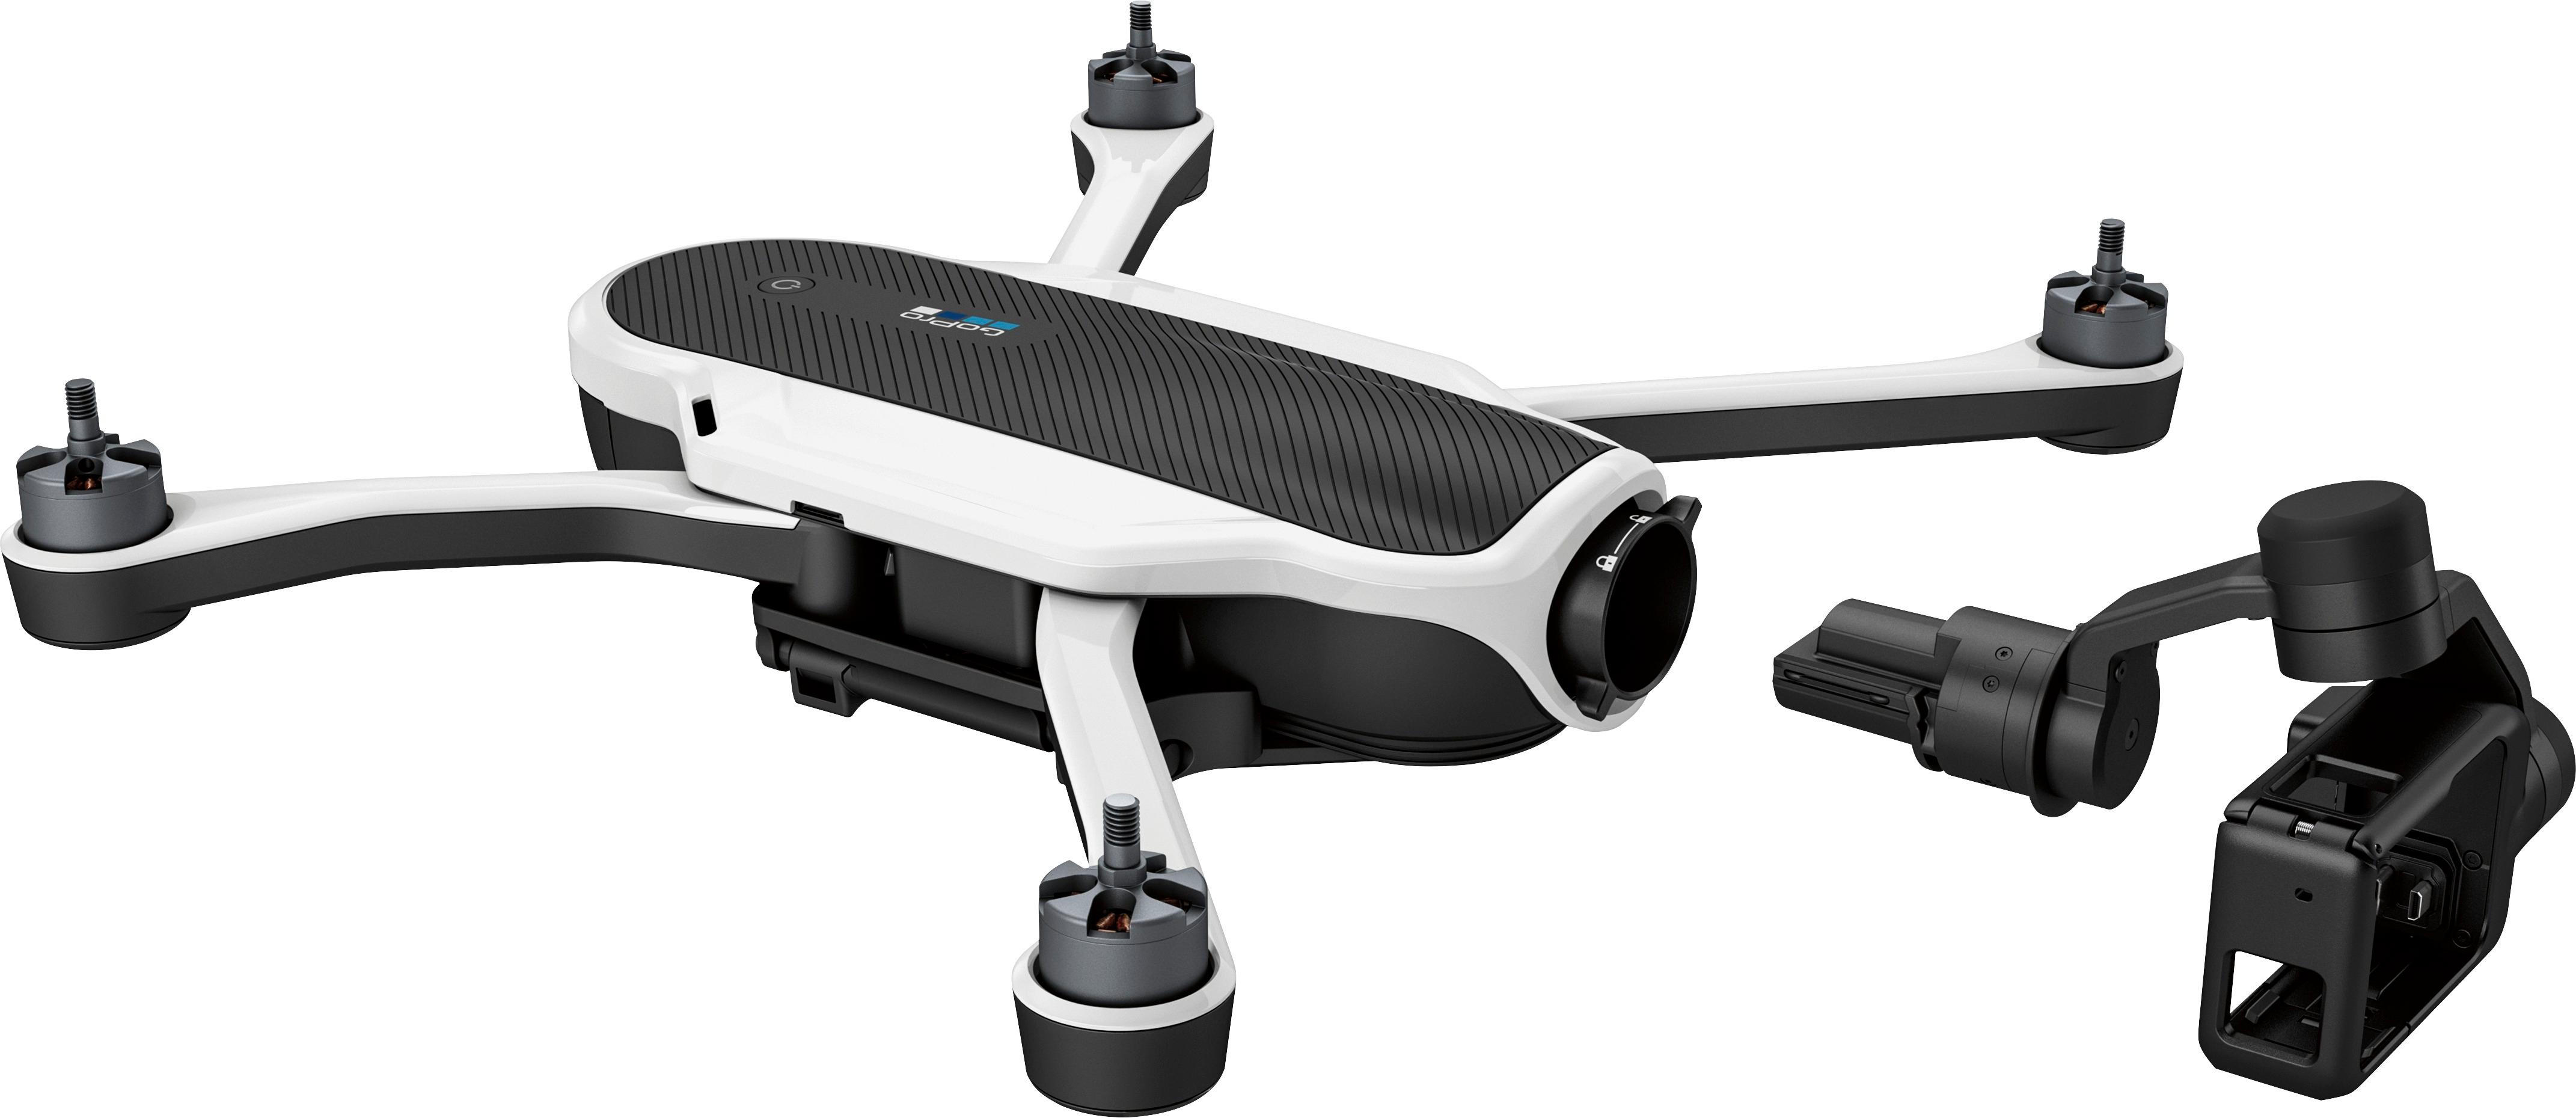 Best Buy: GoPro Karma Quadcopter with HERO5 Black Black/White 